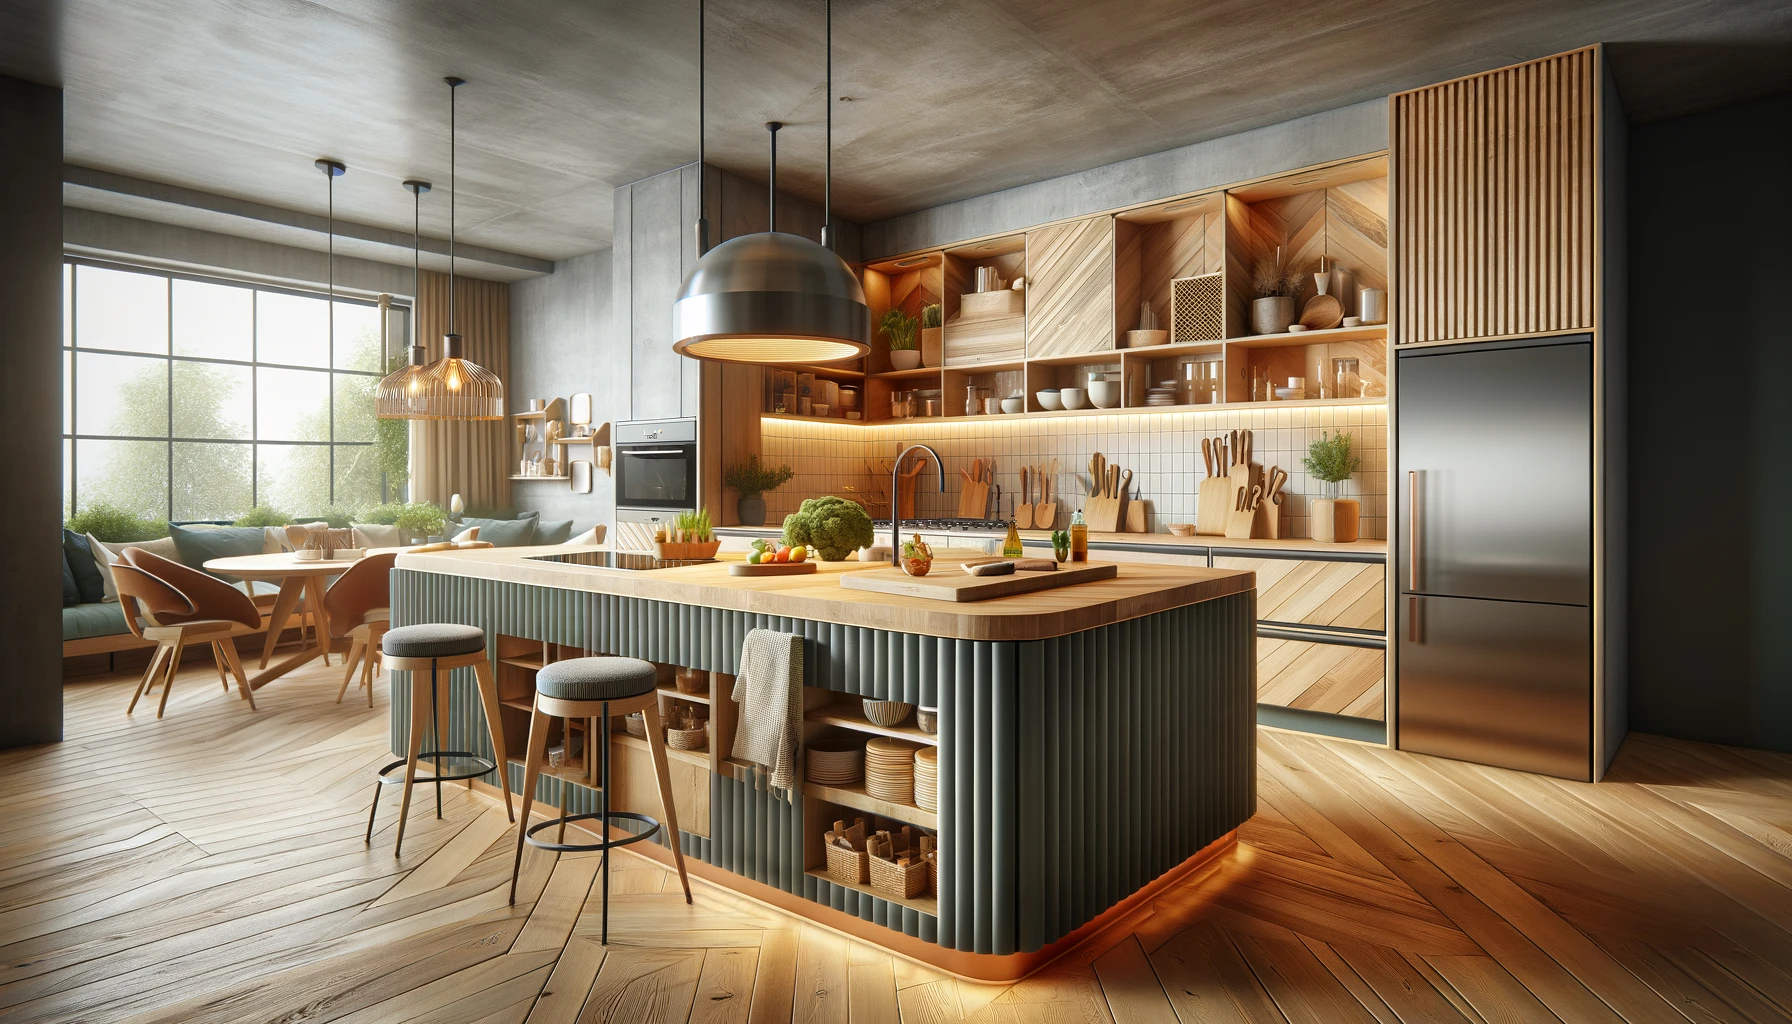 Modern kitchen interior with wooden design and lighting.